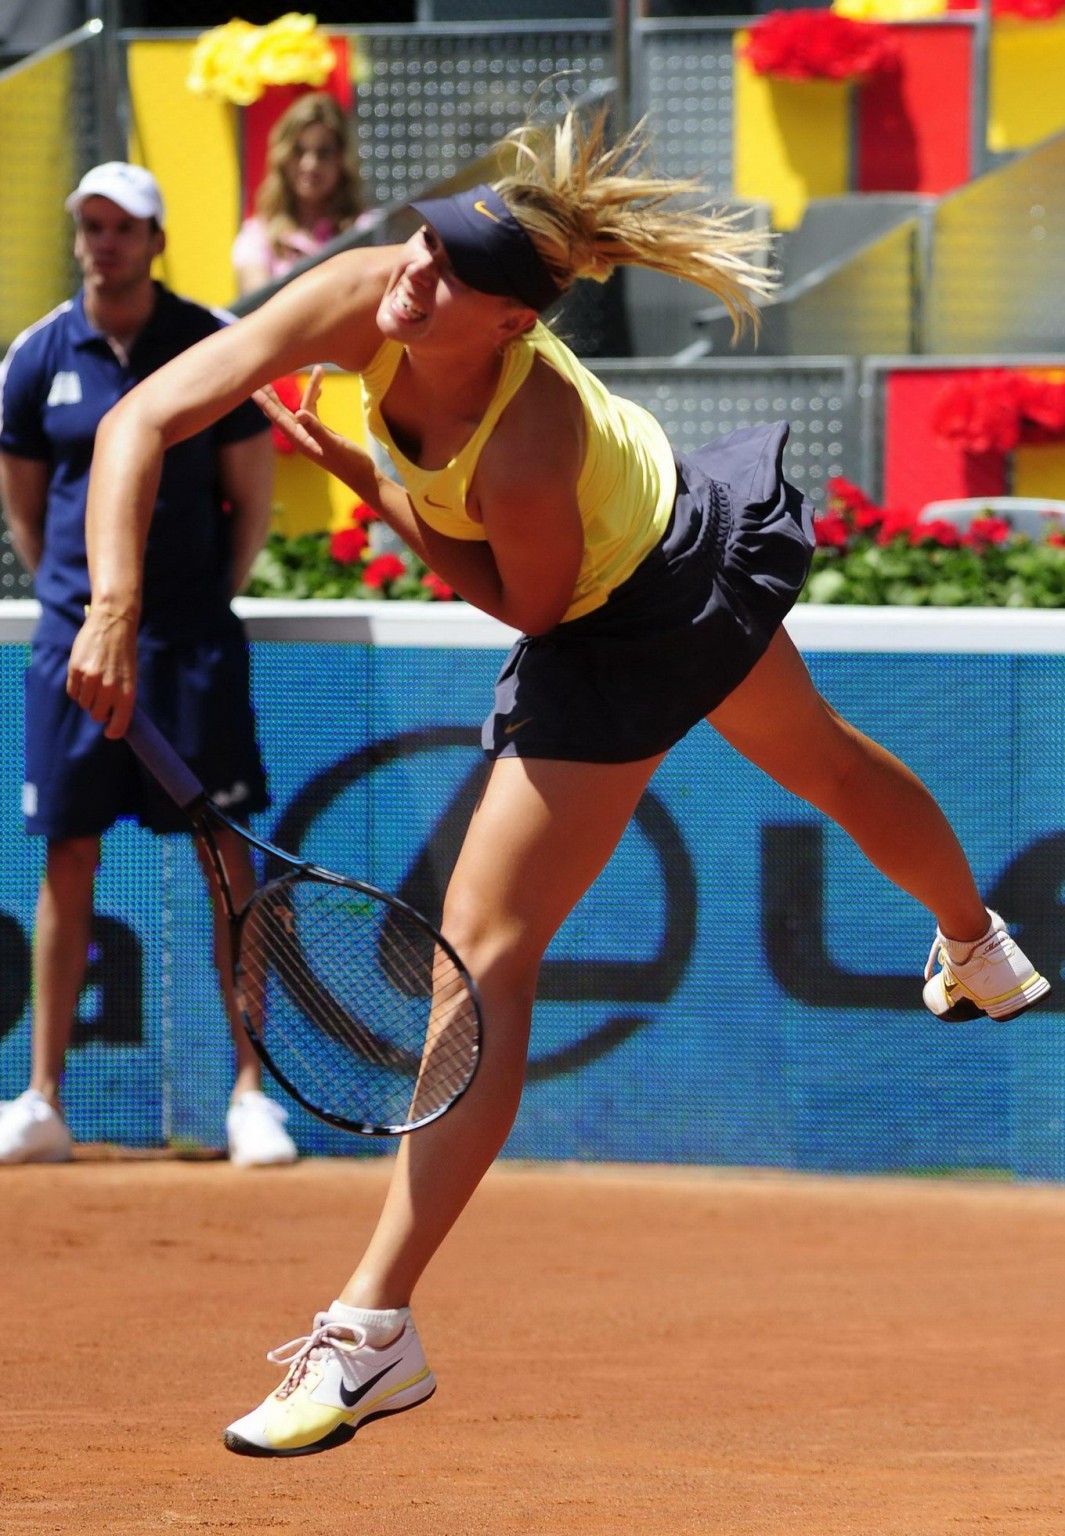 Maria sharapova upskirt al torneo 'madrid masters'
 #75305216